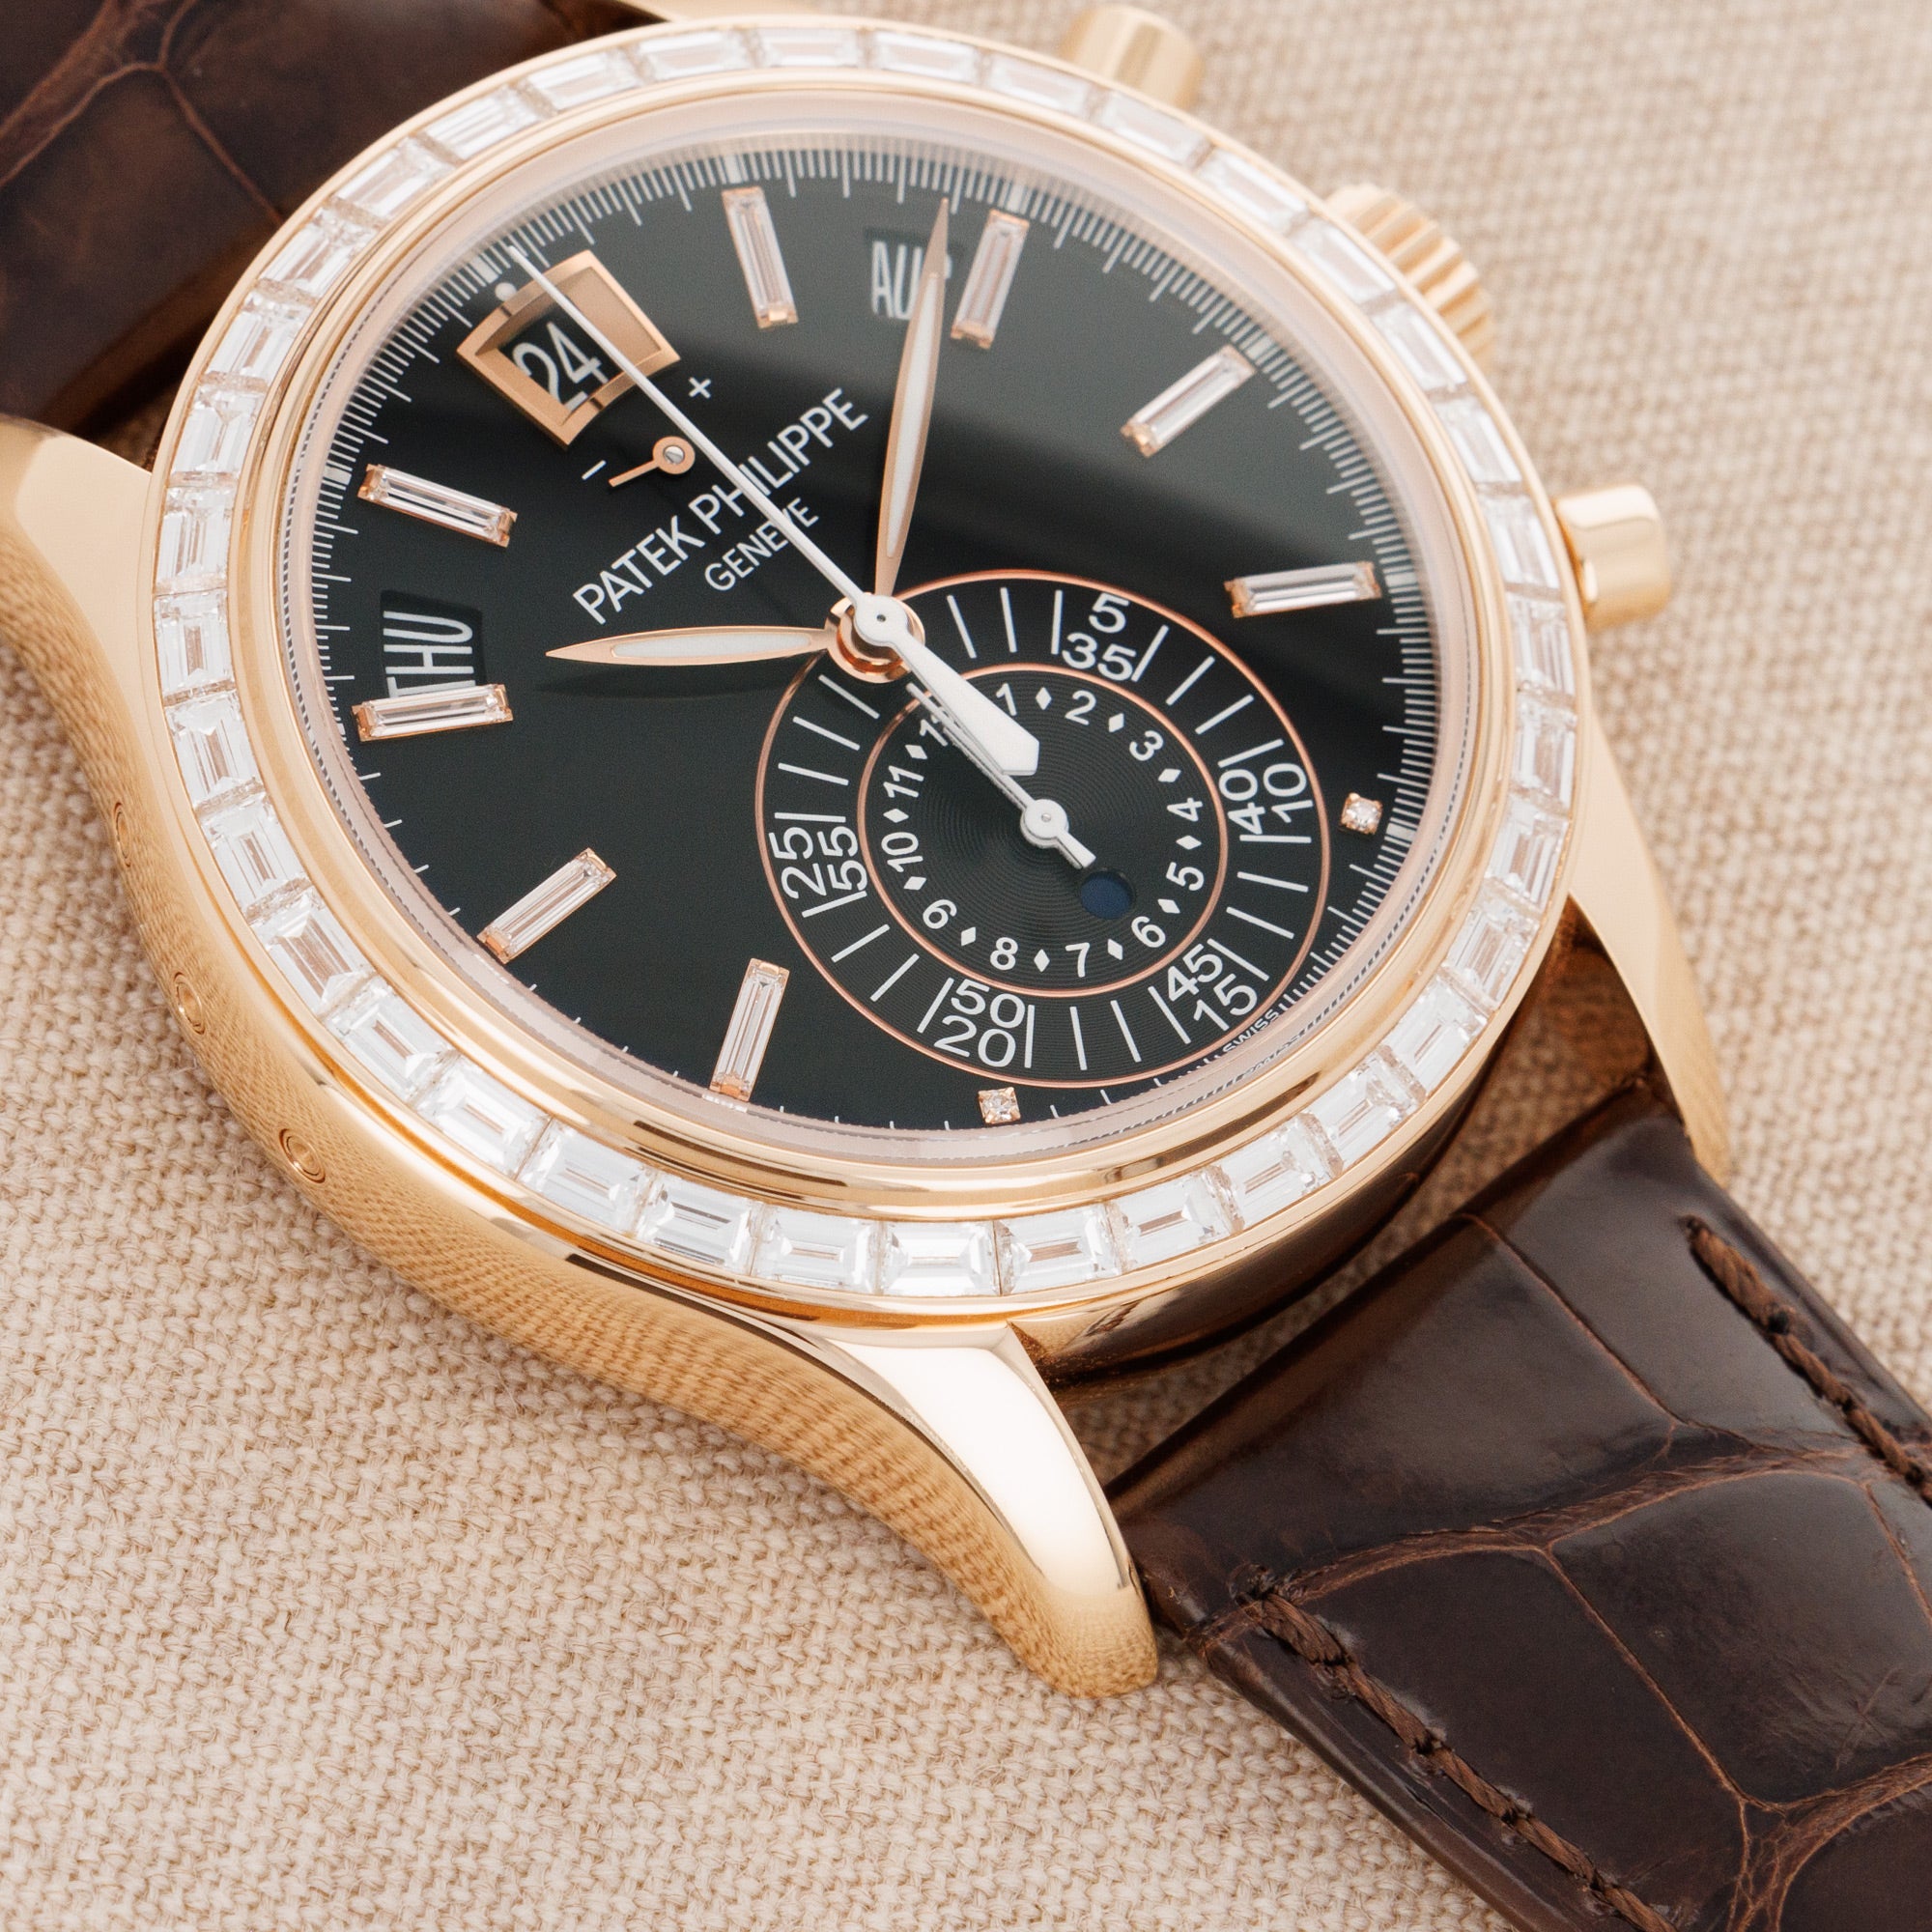 Patek Philippe - Patek Philippe Rose Gold Annual Calendar Chronograph Ref. 5961R with Factory Diamonds - The Keystone Watches